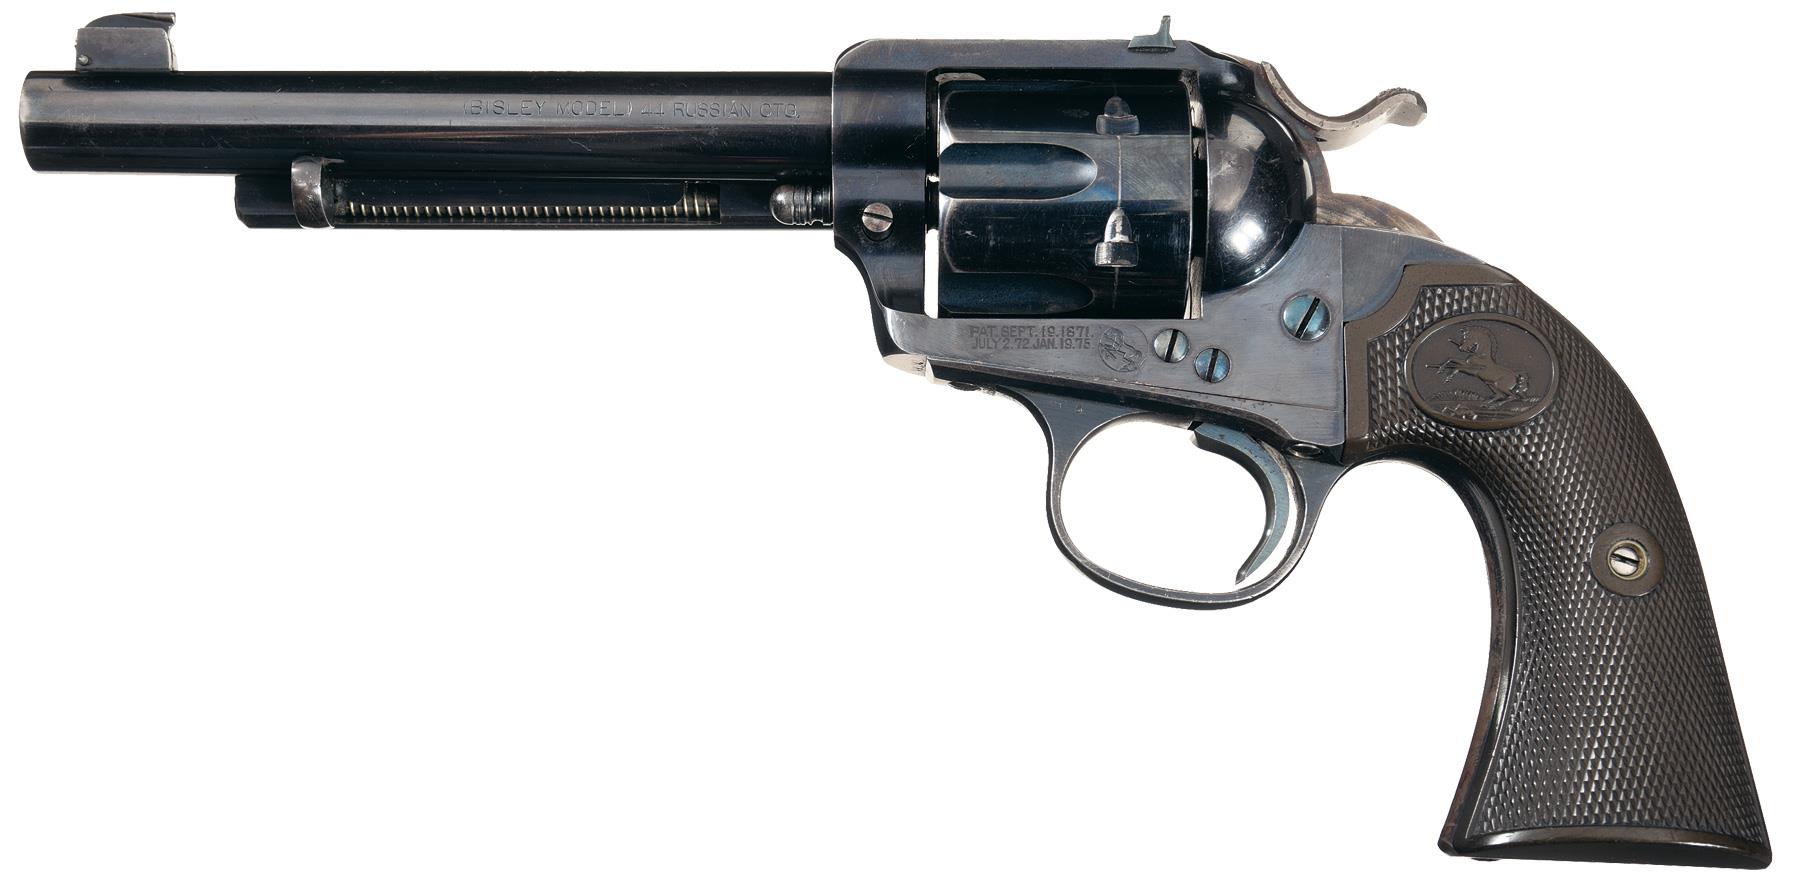 Colt Thompson Submachine Gun Serial Numbers Histories.